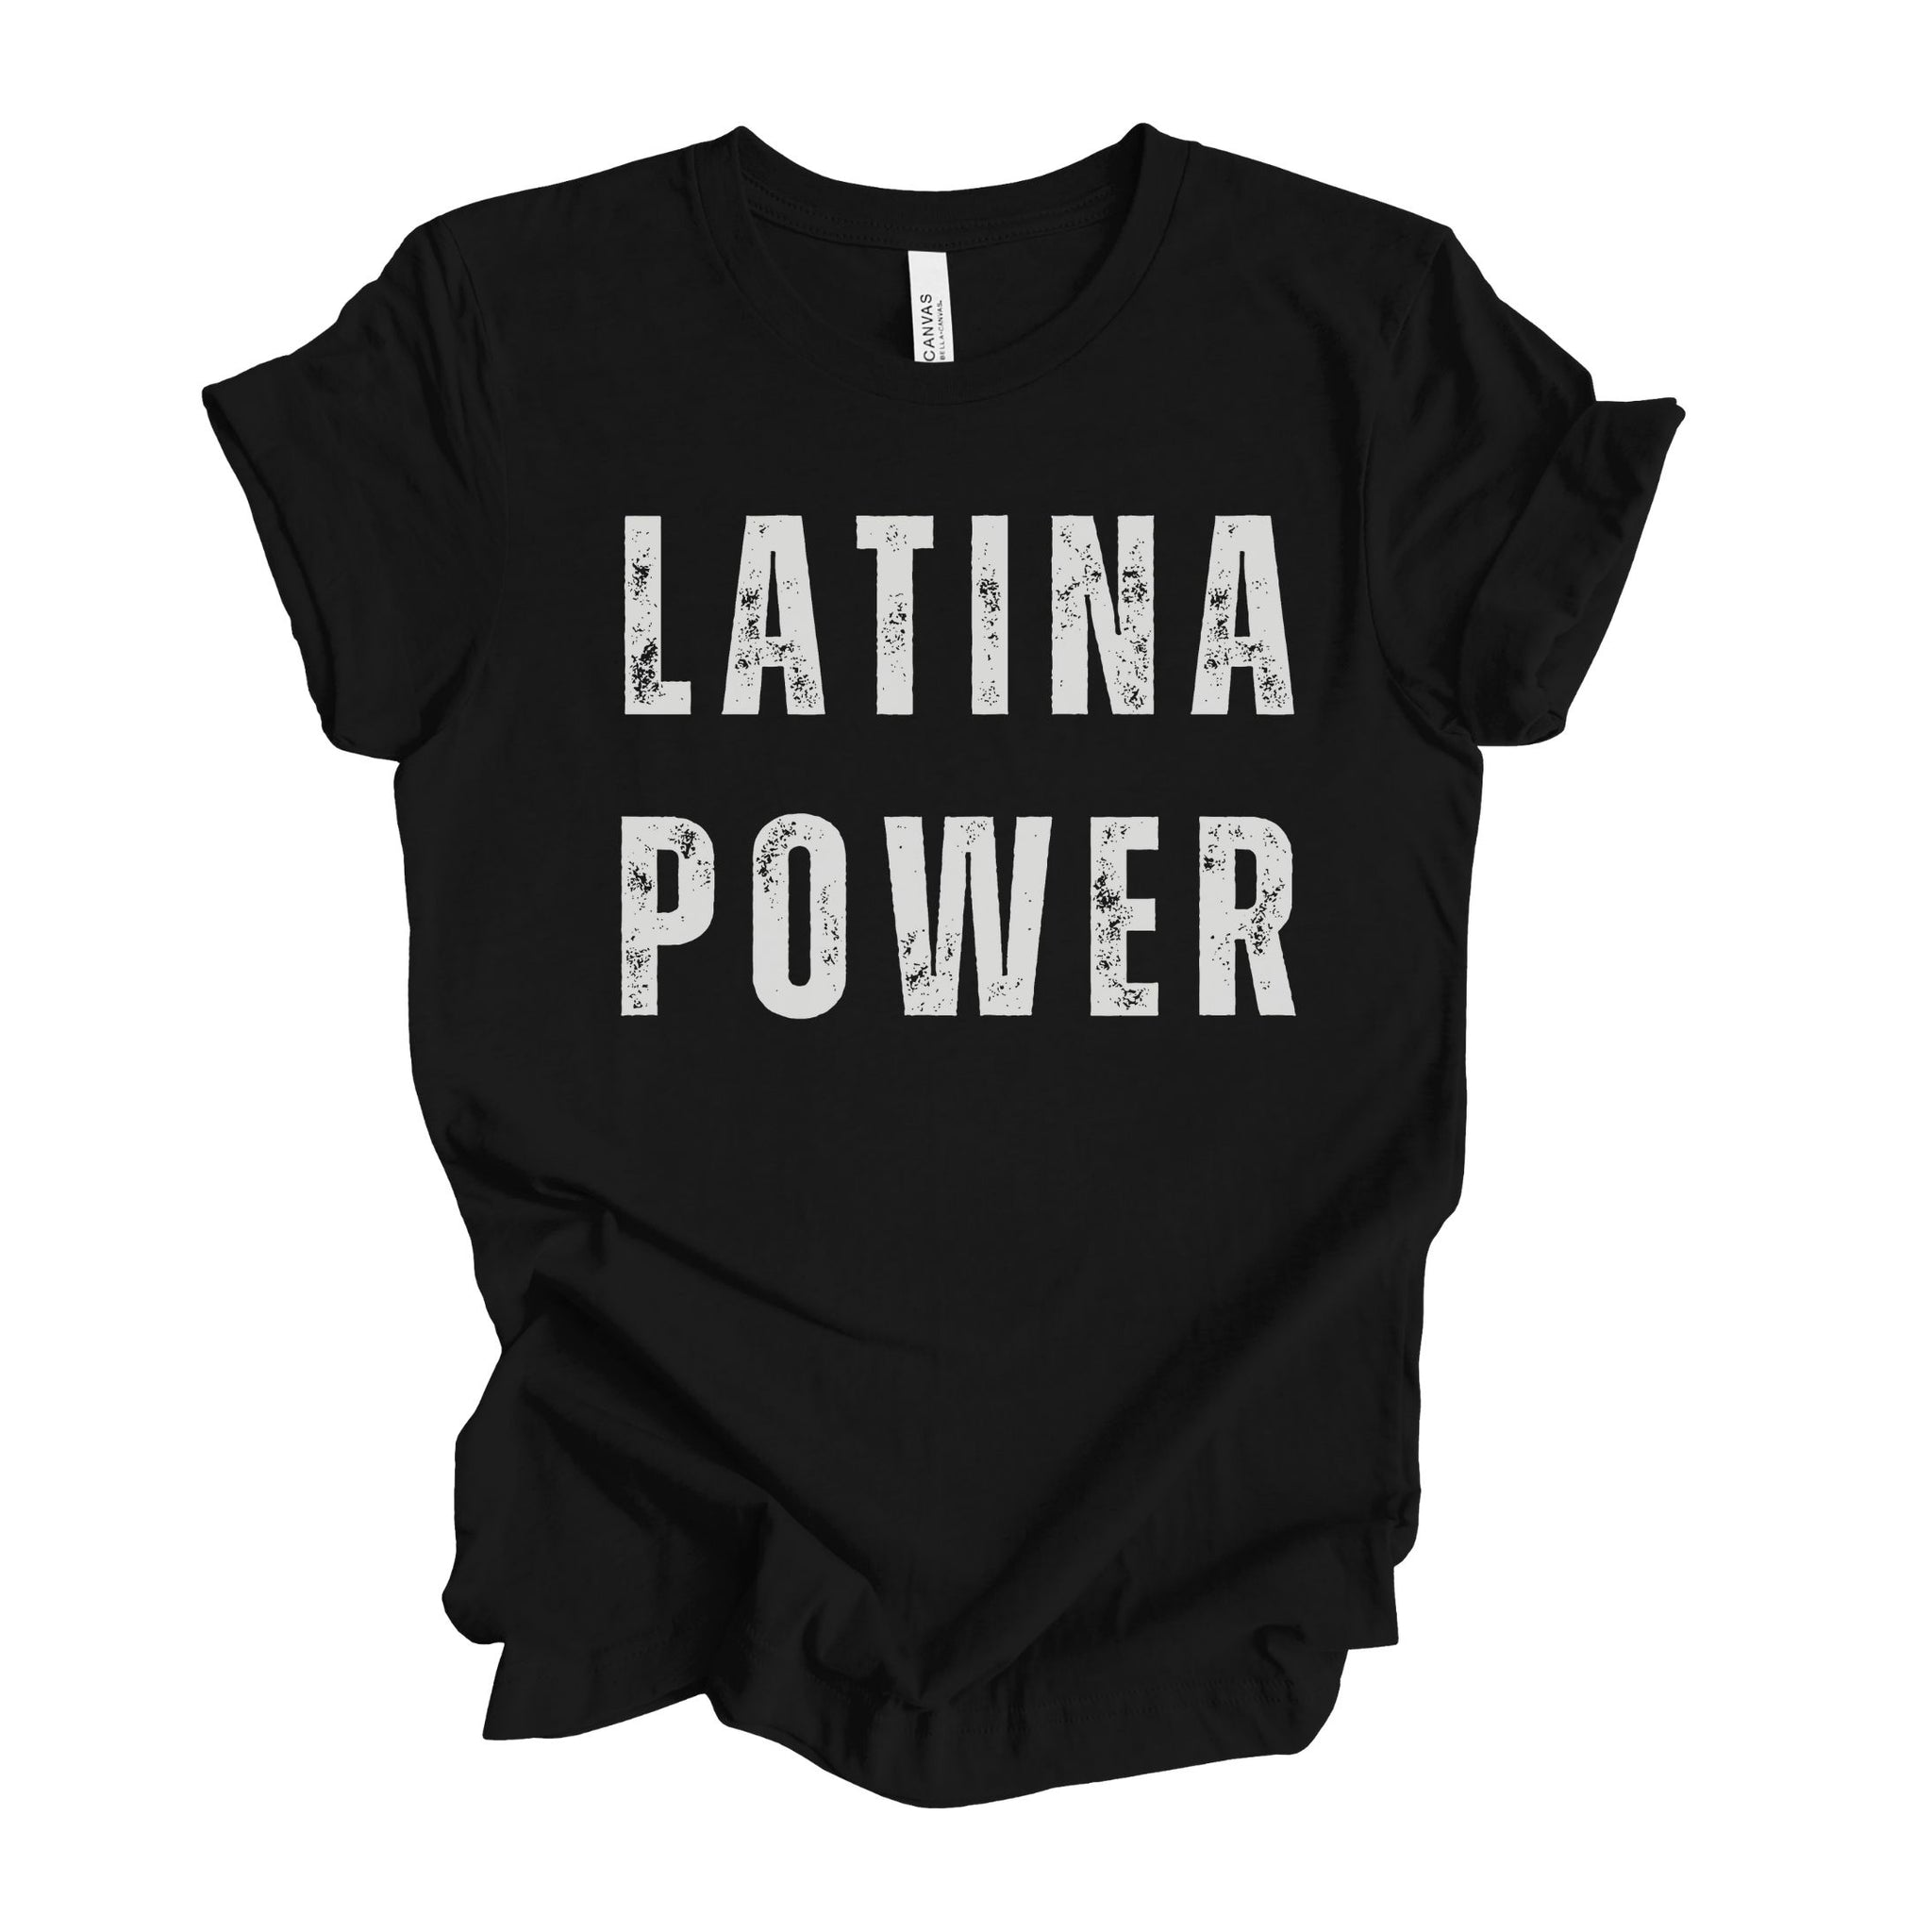 Showcase Latina pride and empowerment with this shirt